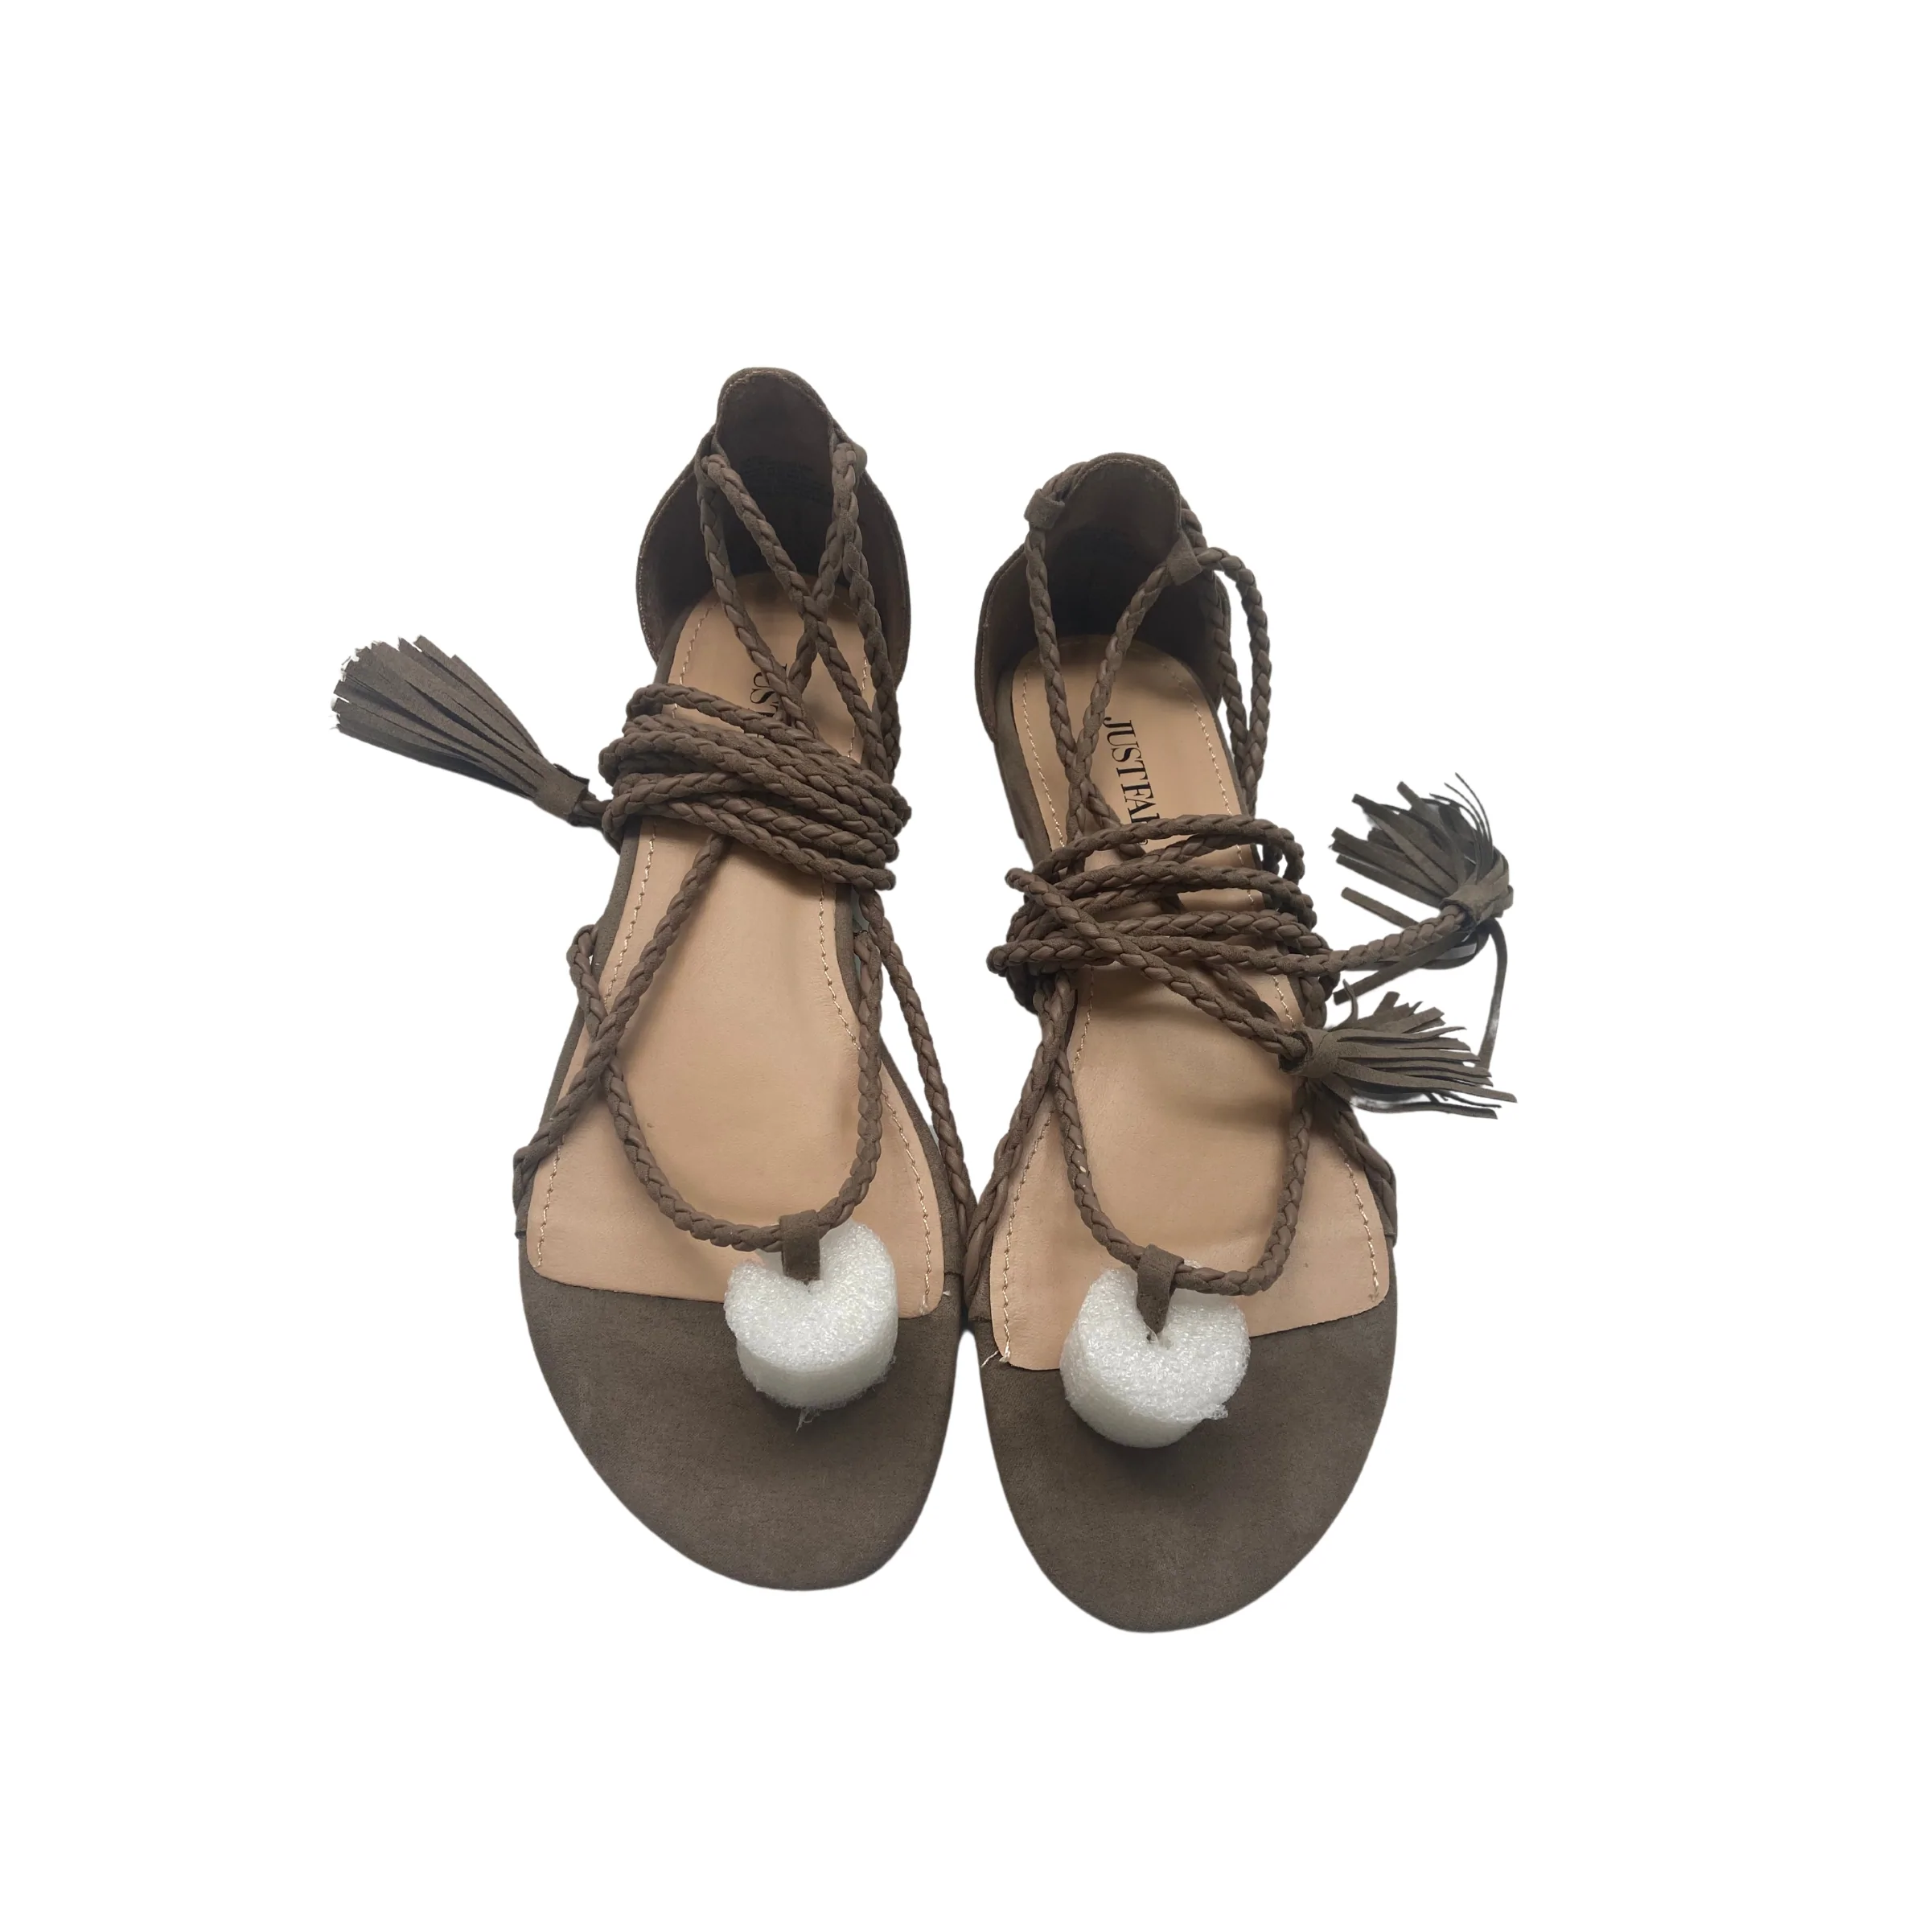 JustFab: Women's Sandals / Flip Flop / Tie Up / Taupe / Flats